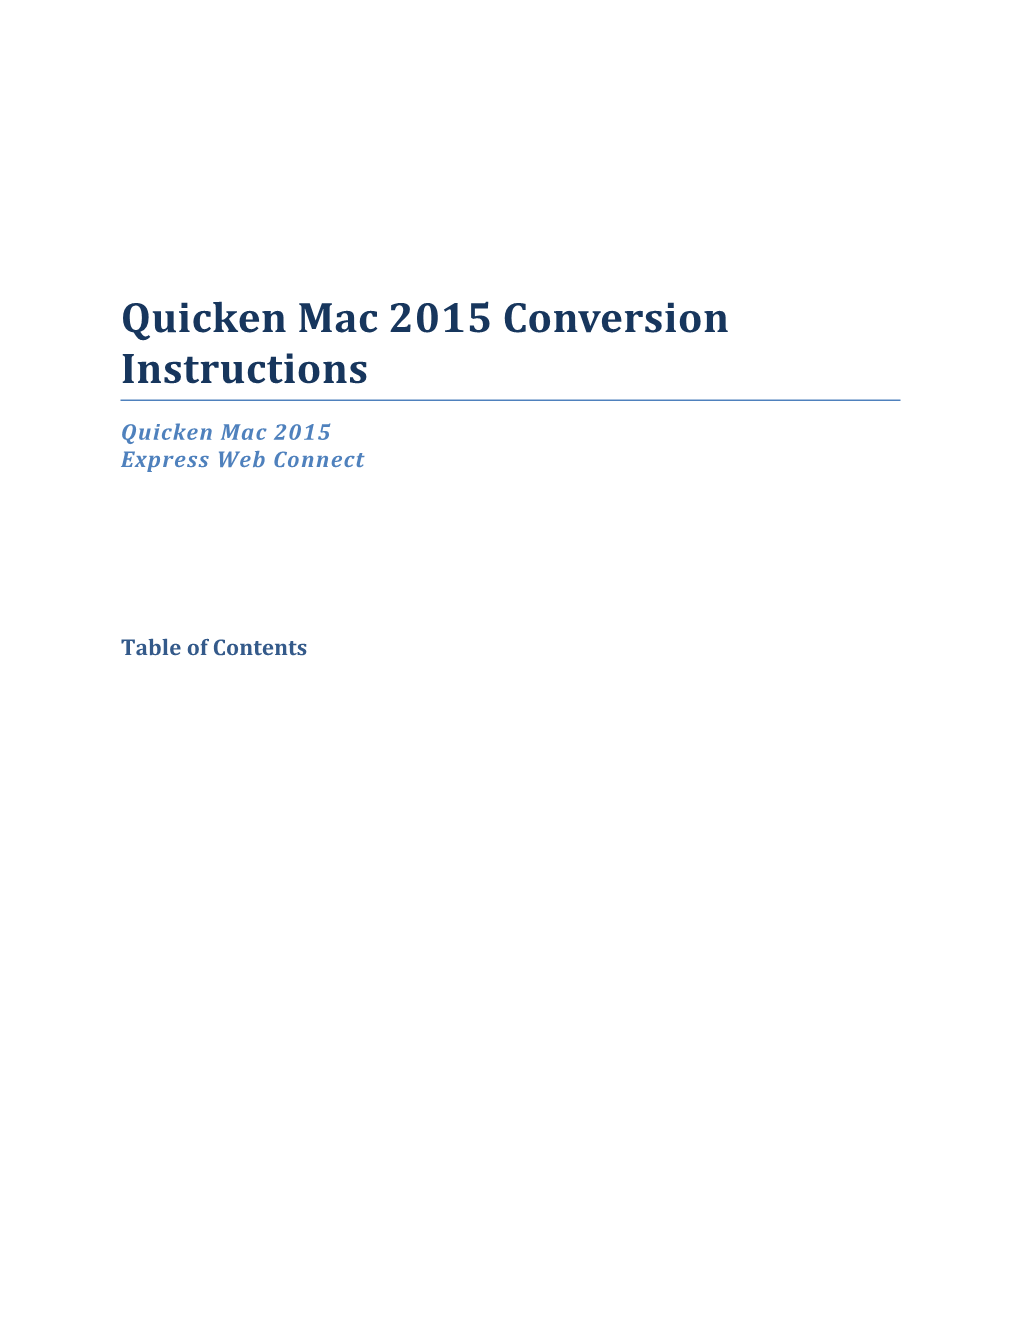 Quicken Mac 2015 Conversion Instructions